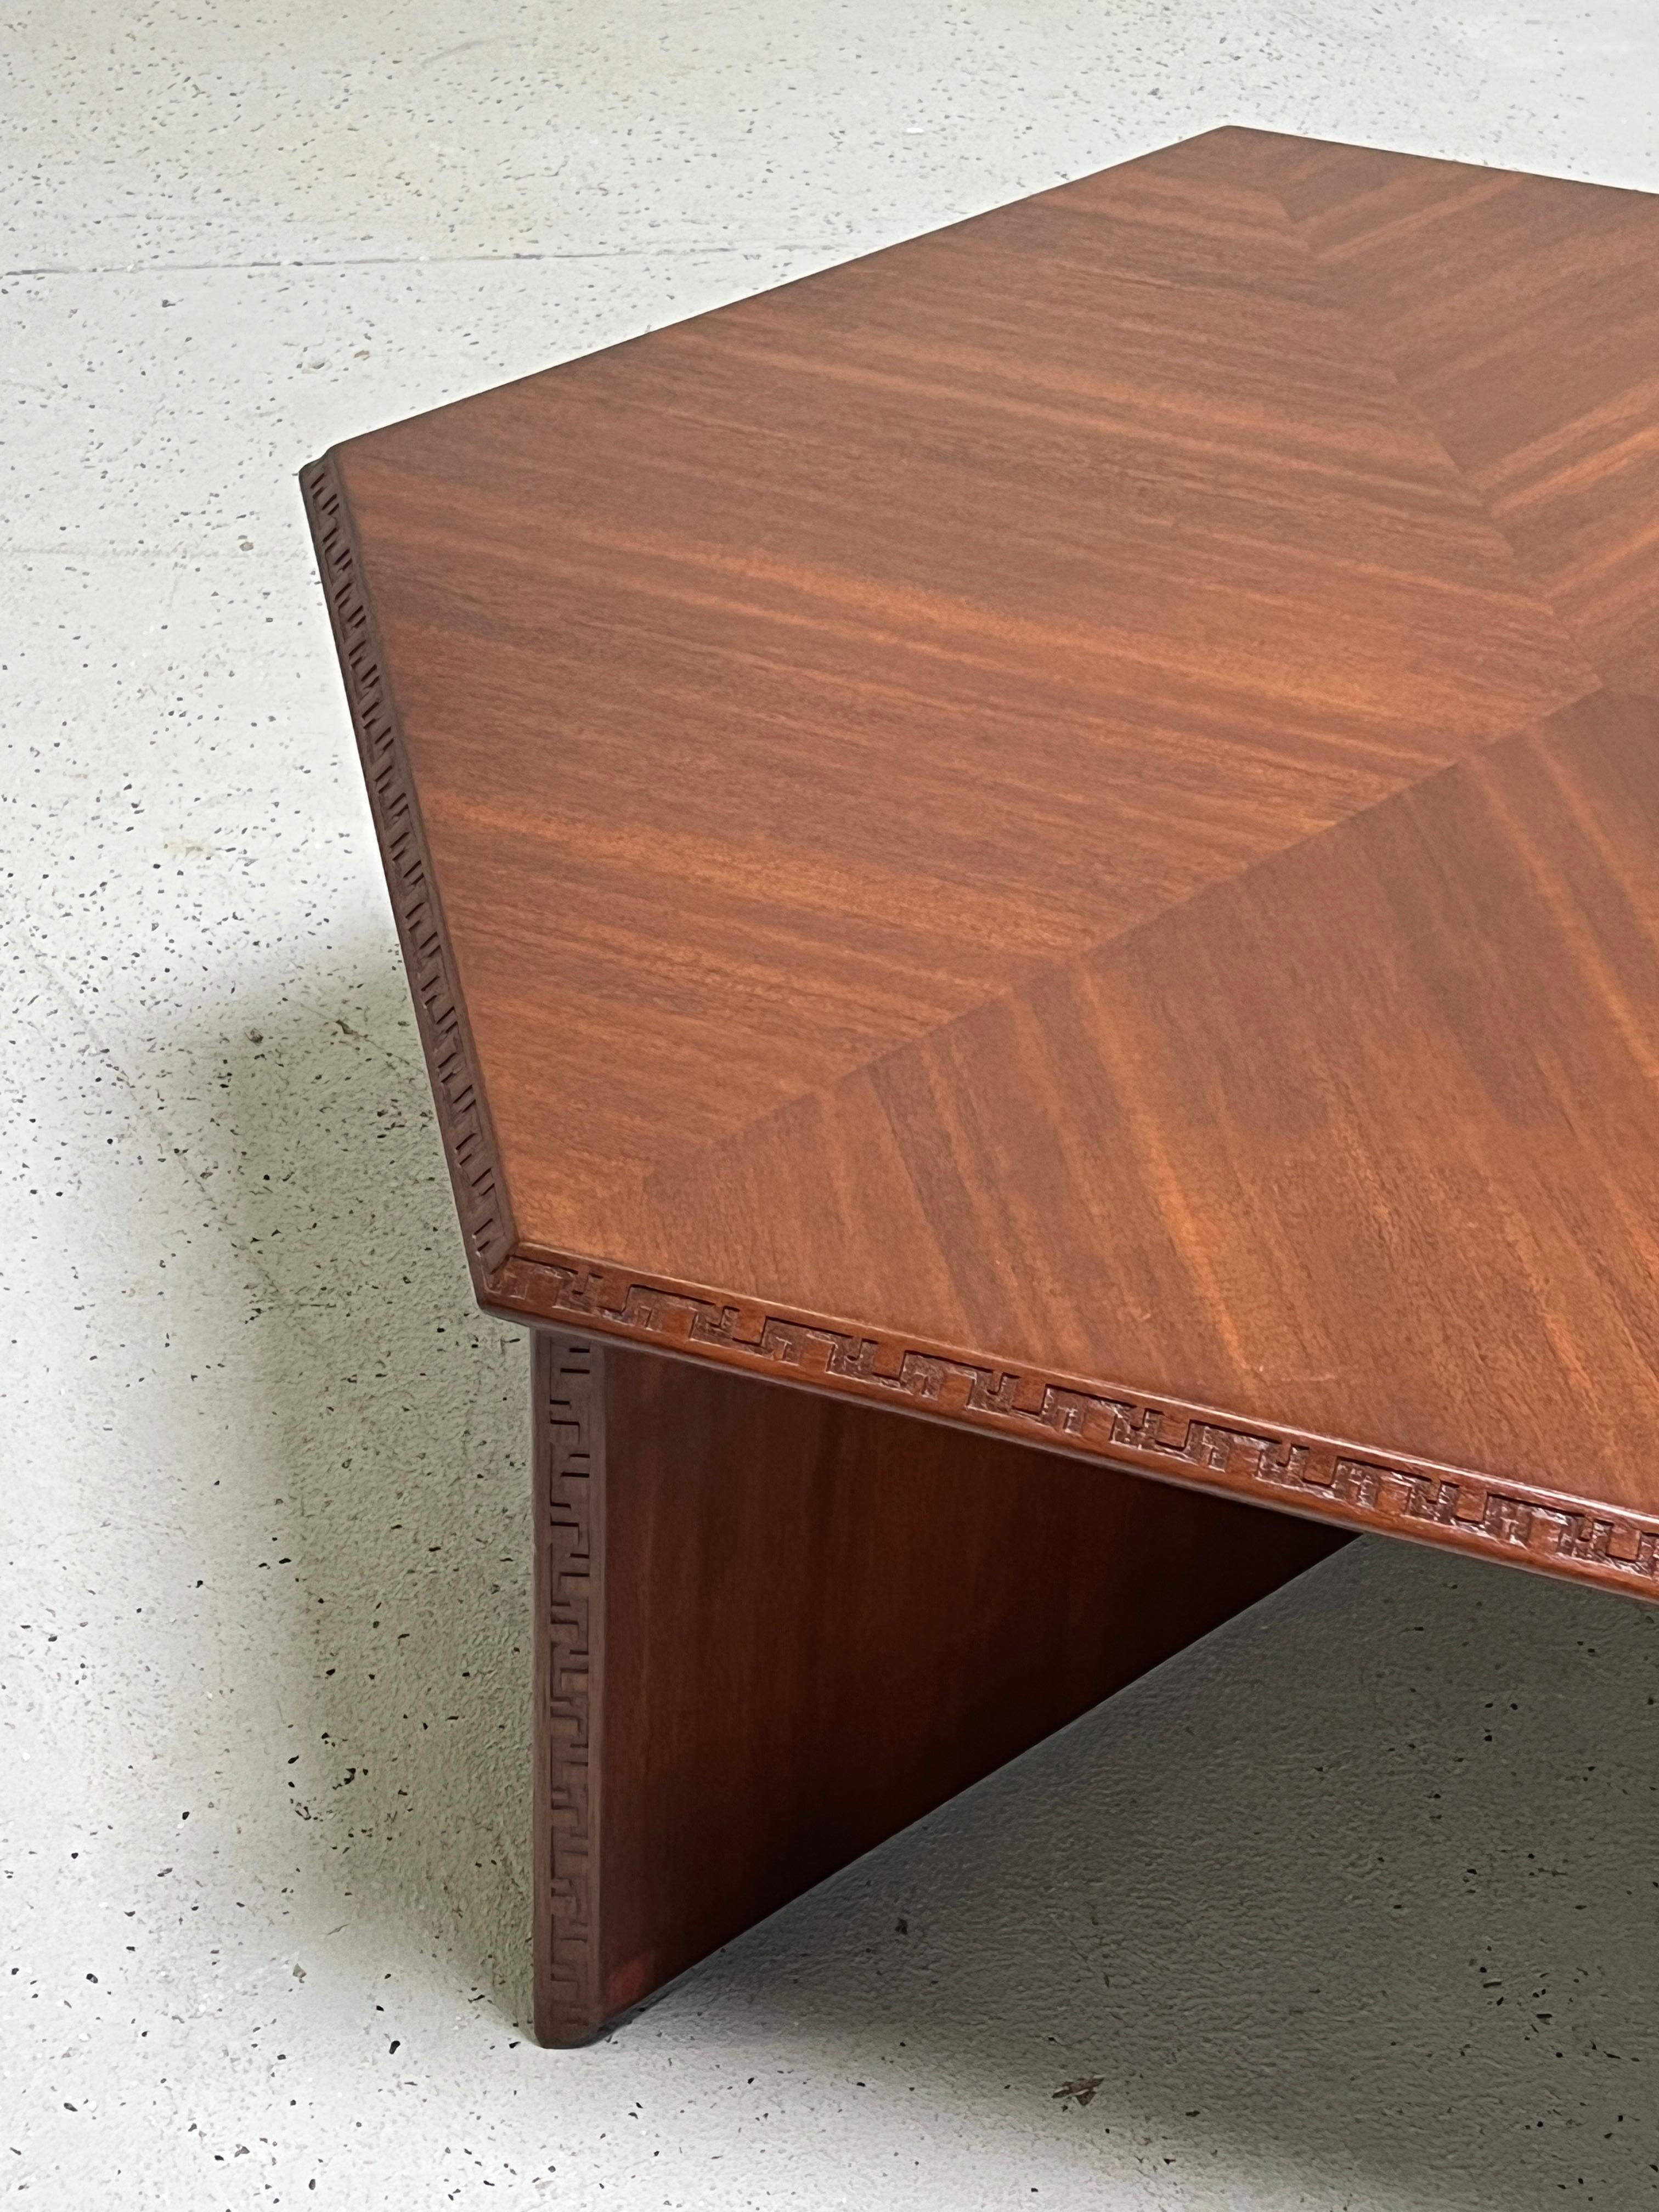 Hexagonal Taliesin Coffee Table by Frank Lloyd Wright for Henredon For Sale 4